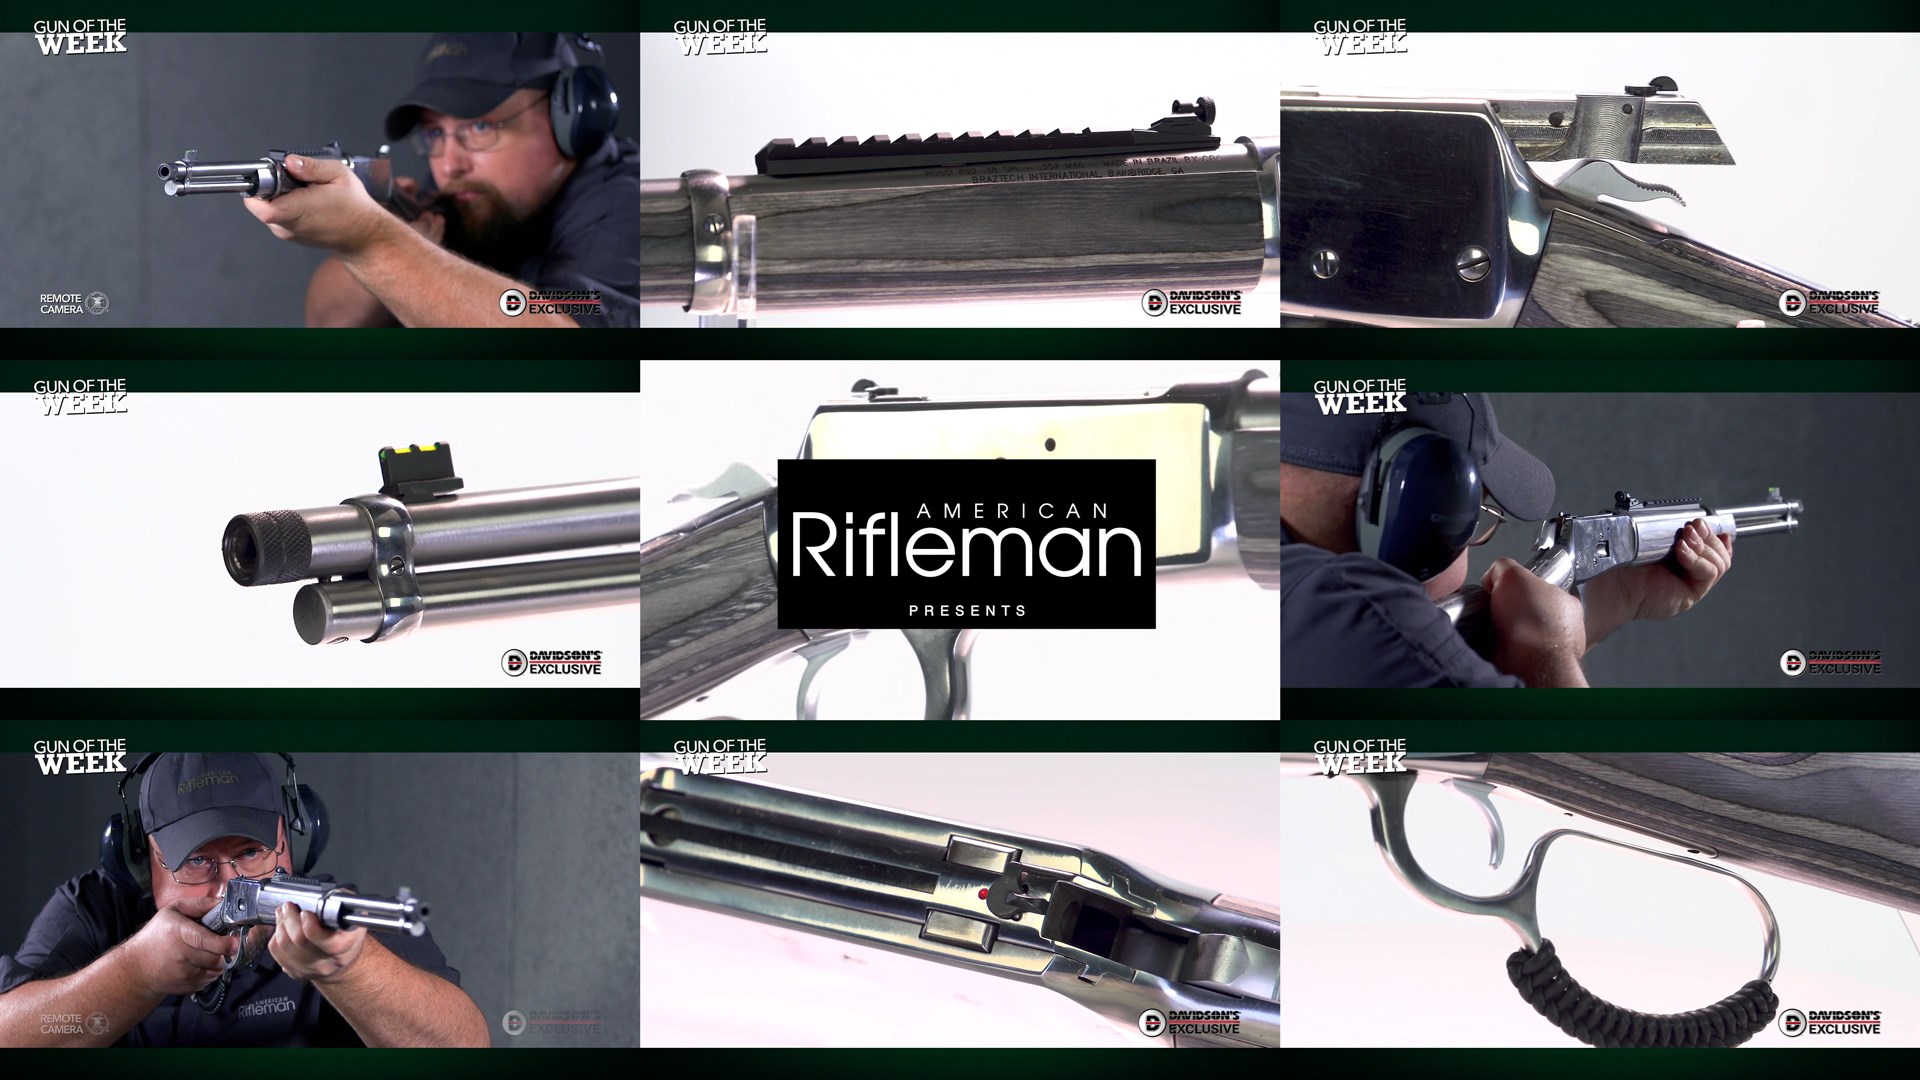 AMERICAN RIFLEMAN PRESETS GUN OF THE WEEK Rossi R92 Davidson's Exclusive lever-action rifle tiles arrangement 9 images together gun details